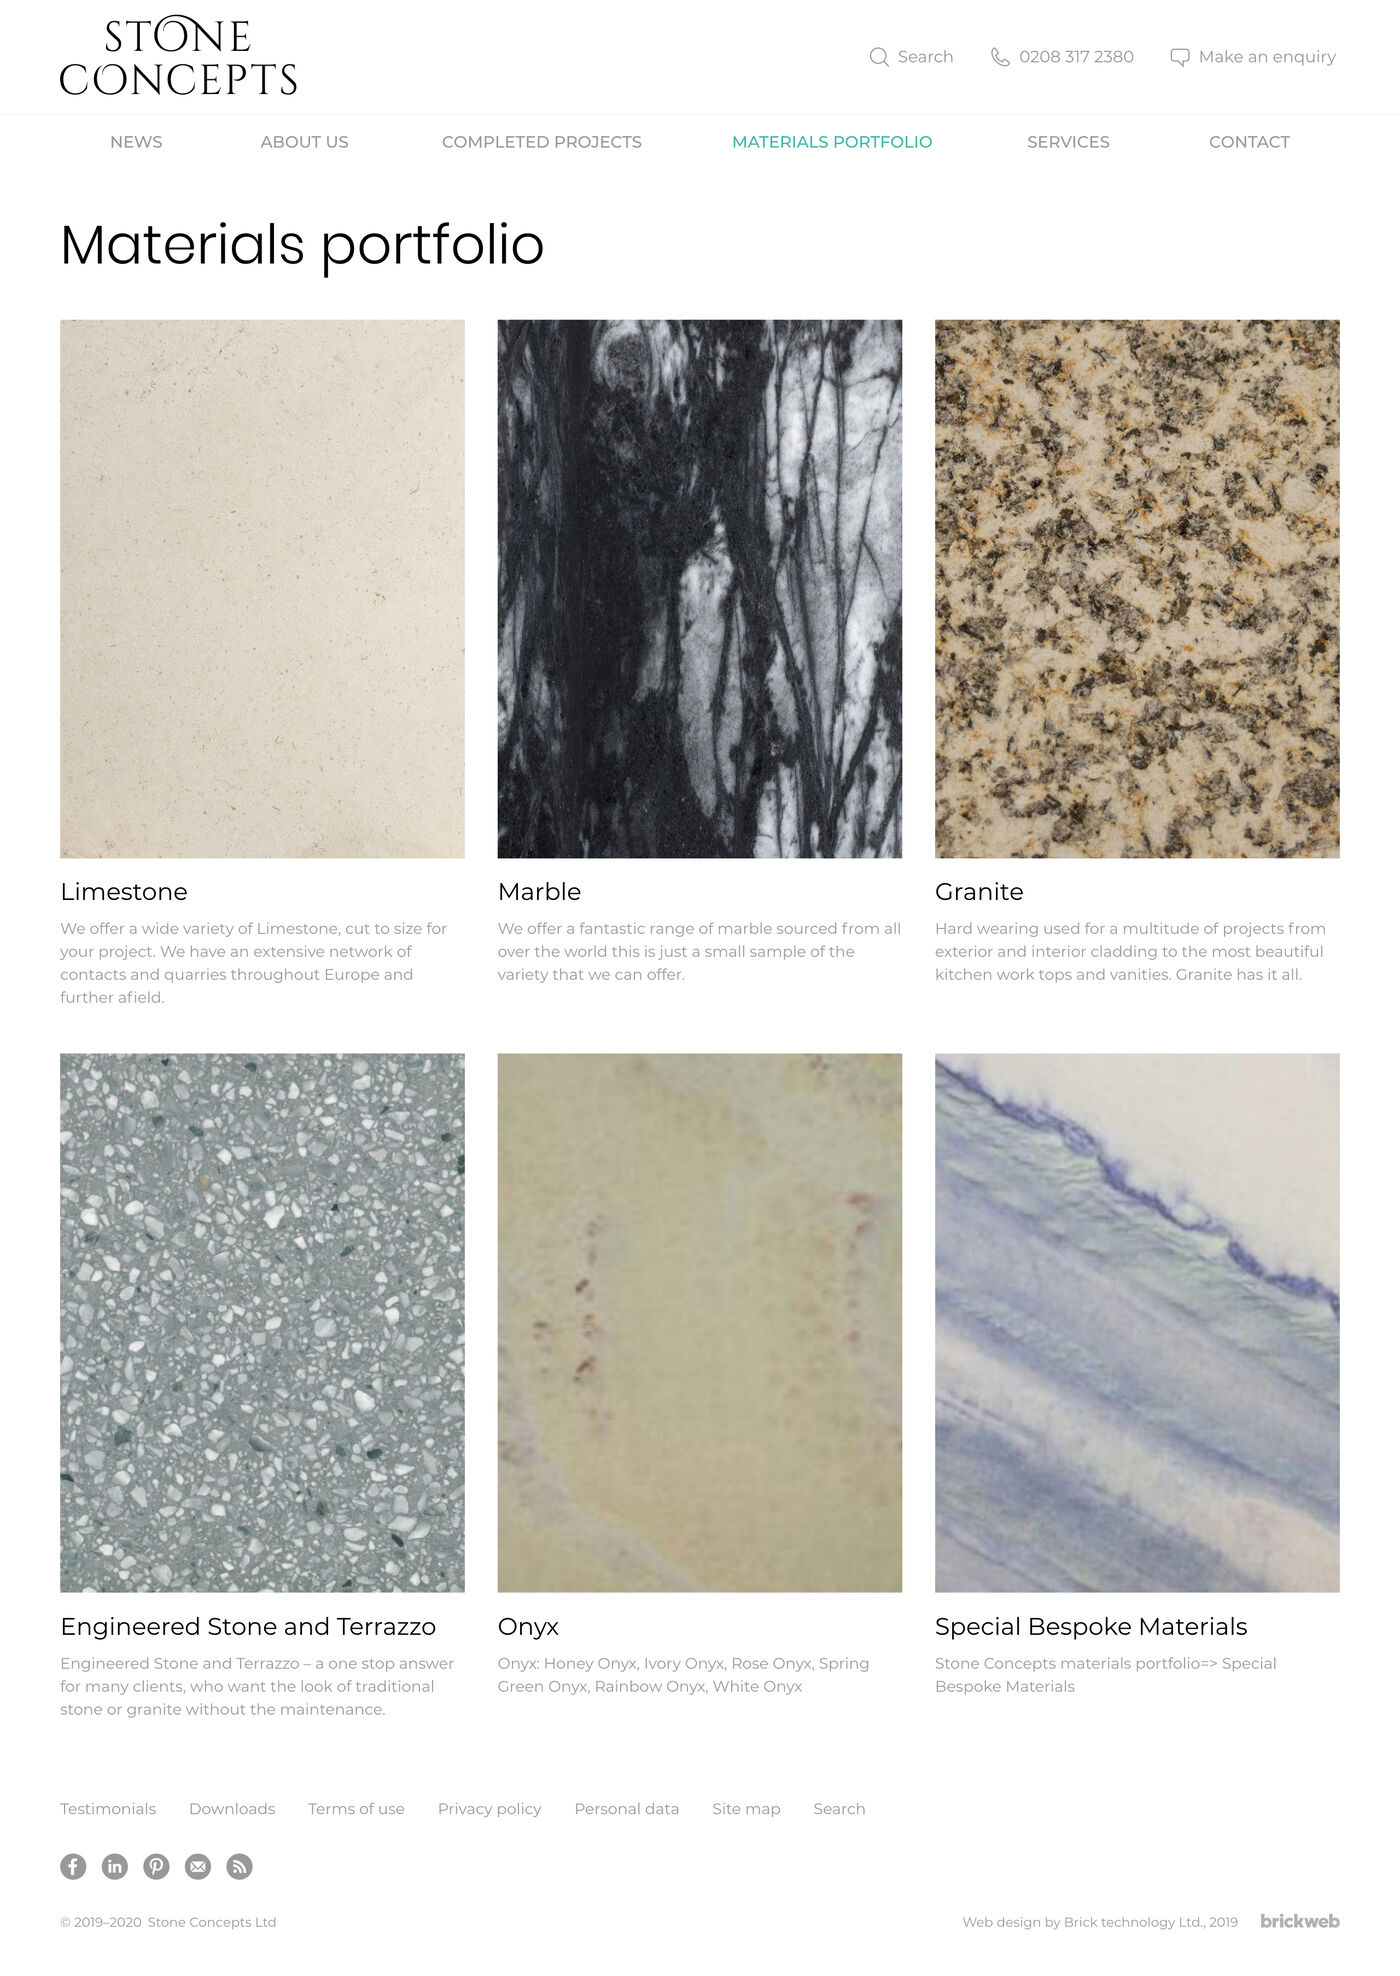 Stone Concepts Materials portfolio